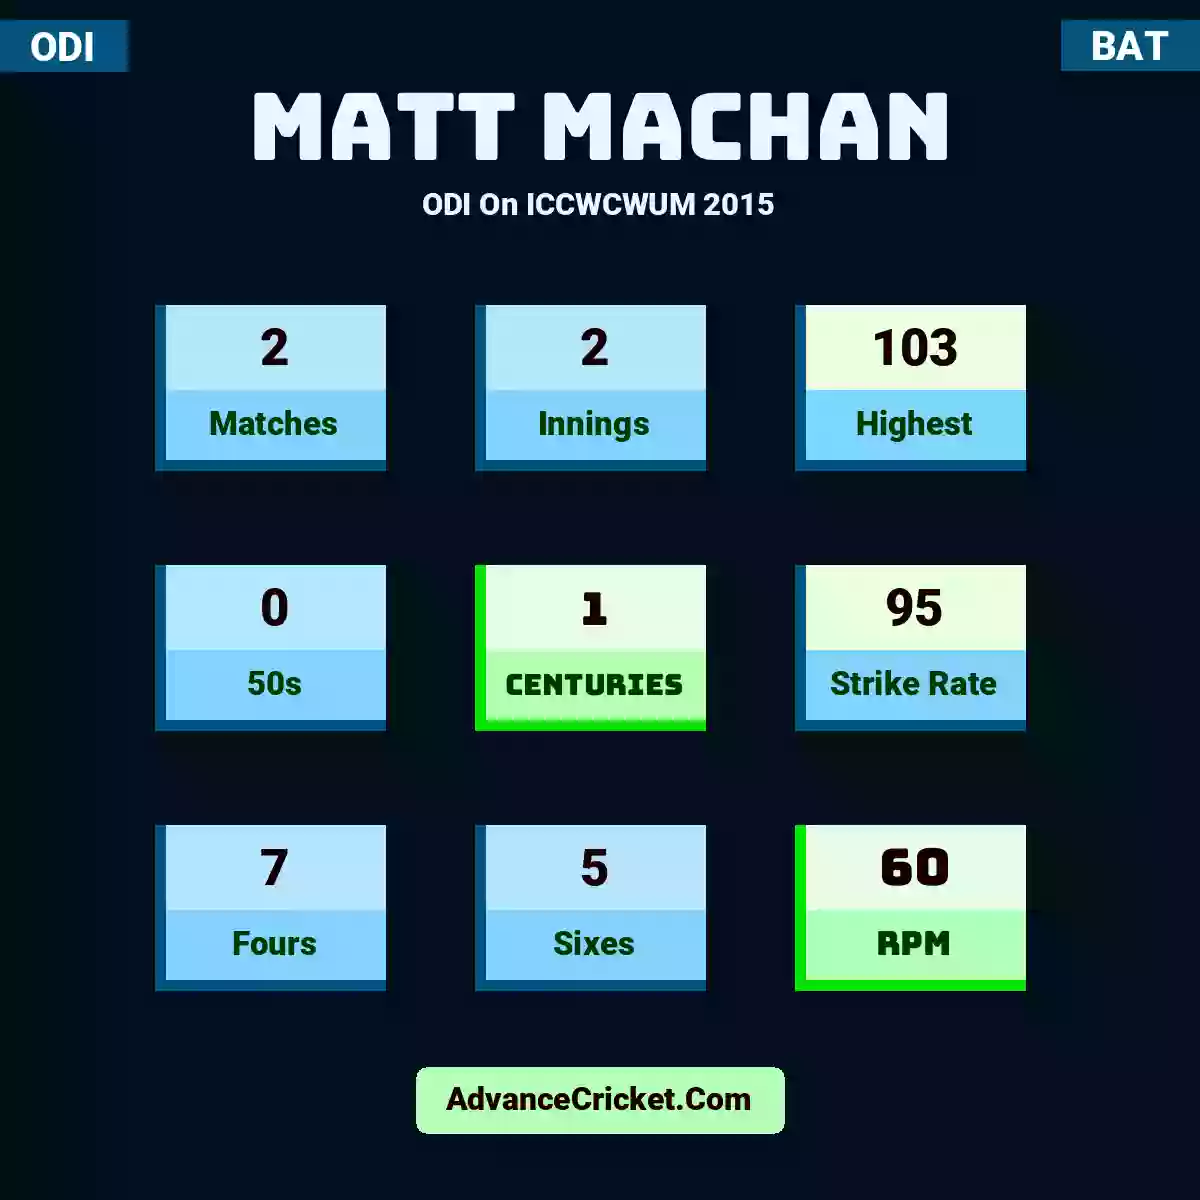 Matt Machan ODI  On ICCWCWUM 2015, Matt Machan played 2 matches, scored 103 runs as highest, 0 half-centuries, and 1 centuries, with a strike rate of 95. M.Machan hit 7 fours and 5 sixes, with an RPM of 60.